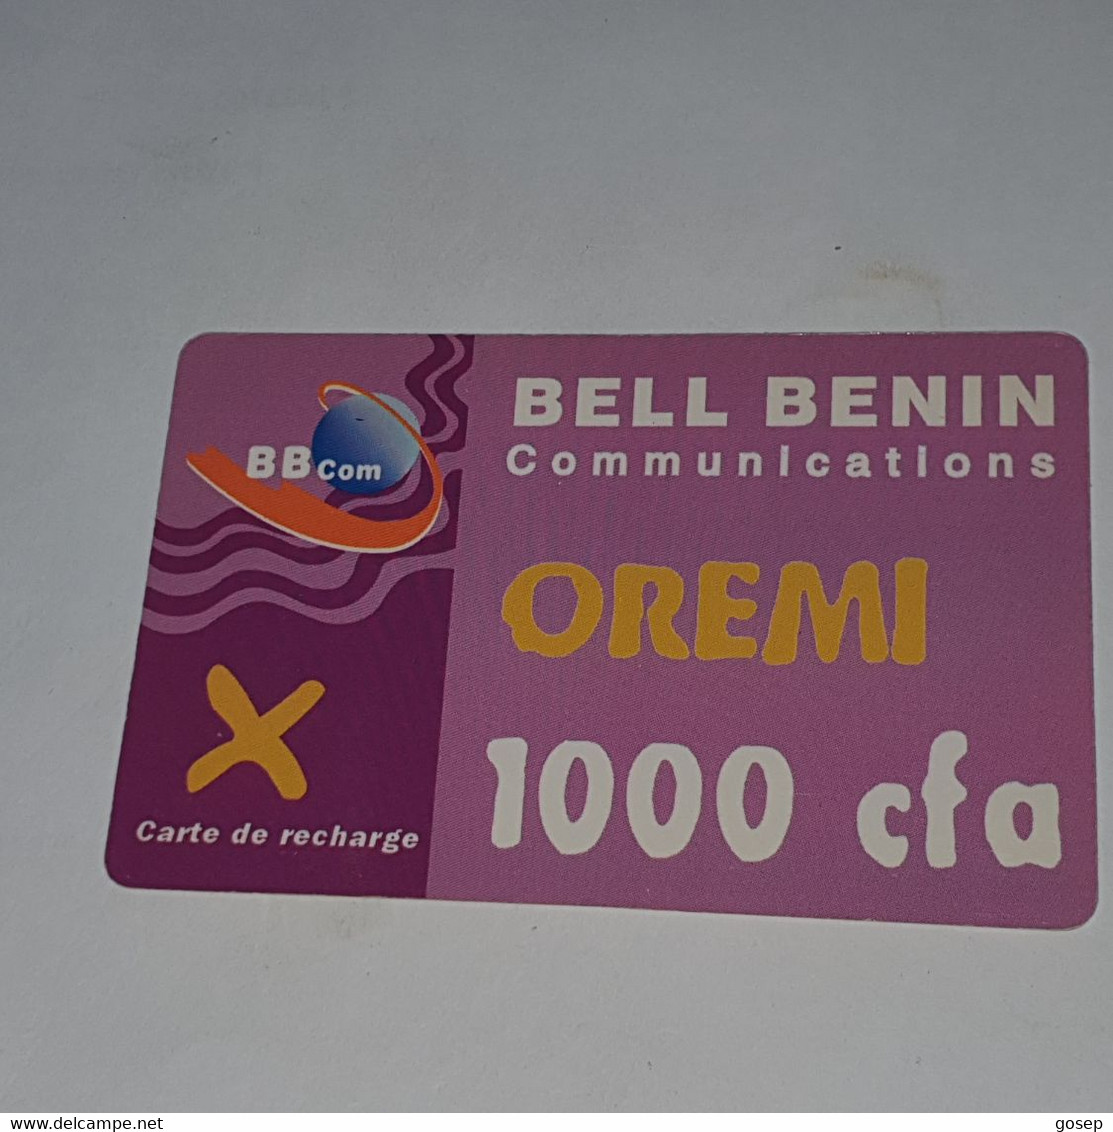 BENIN-(BJ-ORE-REF-0001A1)-dark Pink-(24)-(1000fcfa)-(0105-578-365-4301)-used Card+1card Prepiad Free - Benin